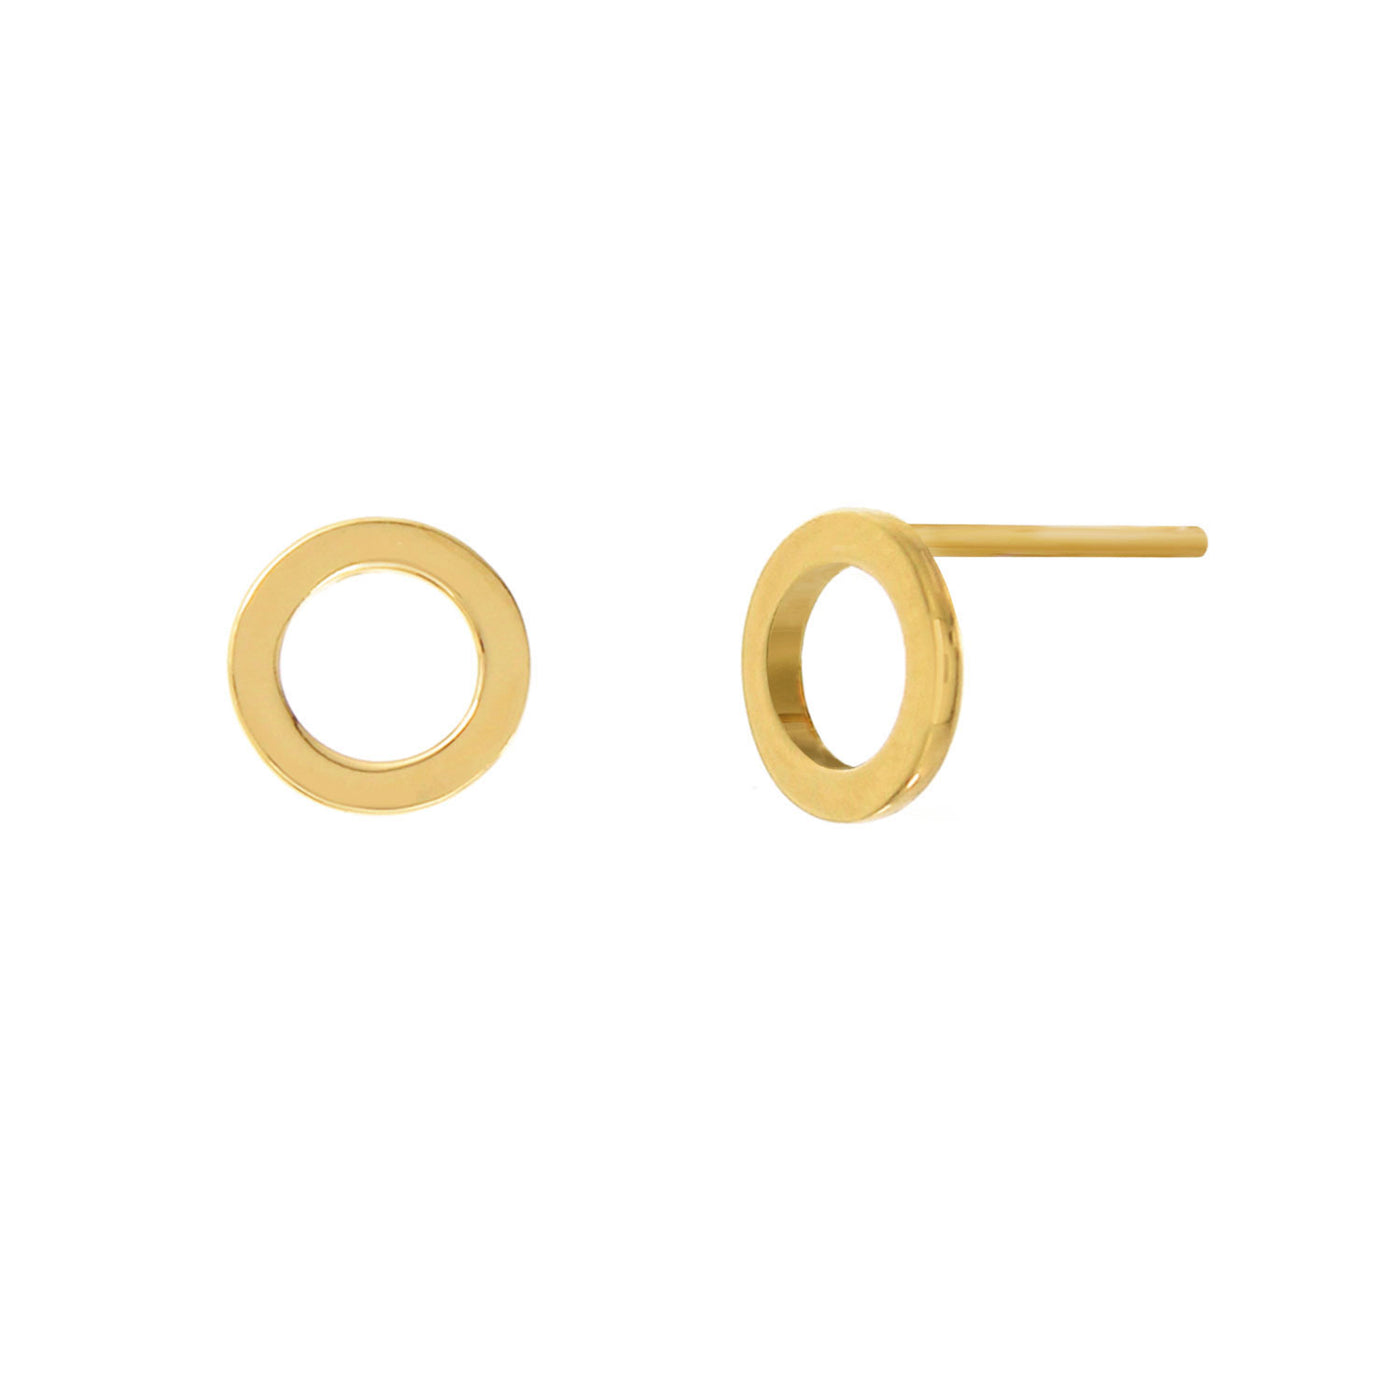 Plain gold circle stud earrings